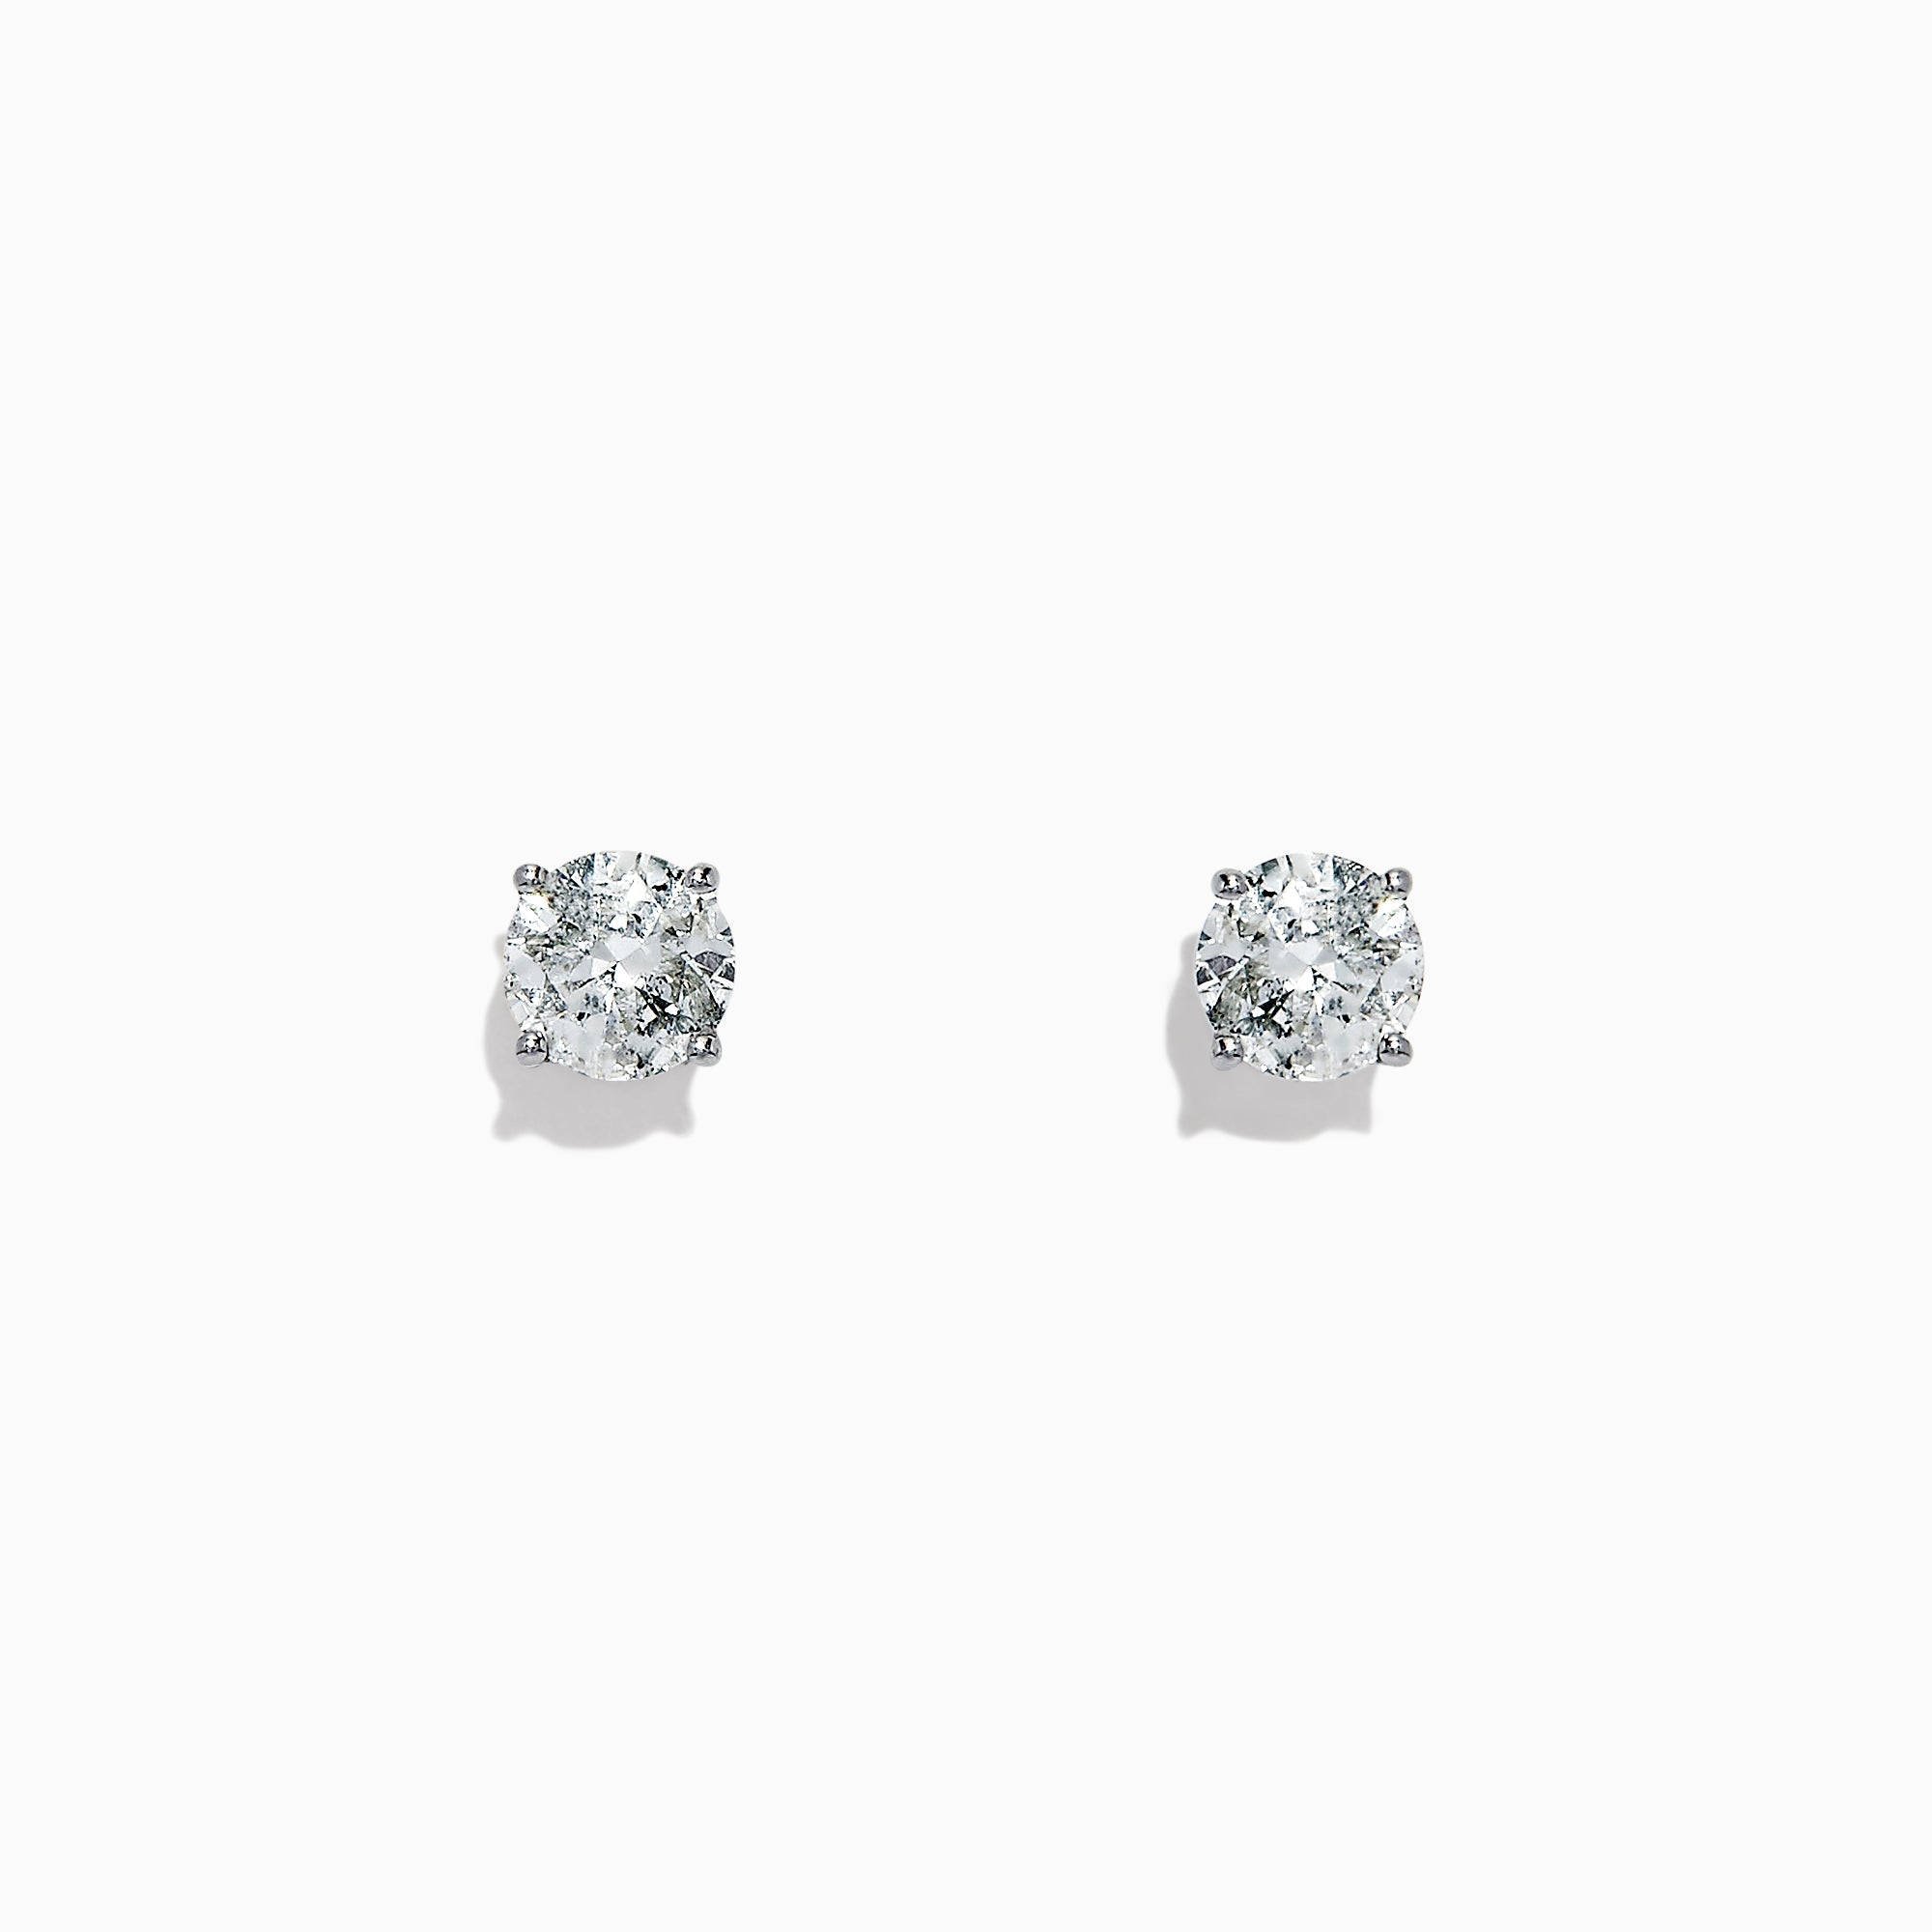 Effy 18K White Gold Diamond Solitaire Stud Earrings, 0.74 TCW